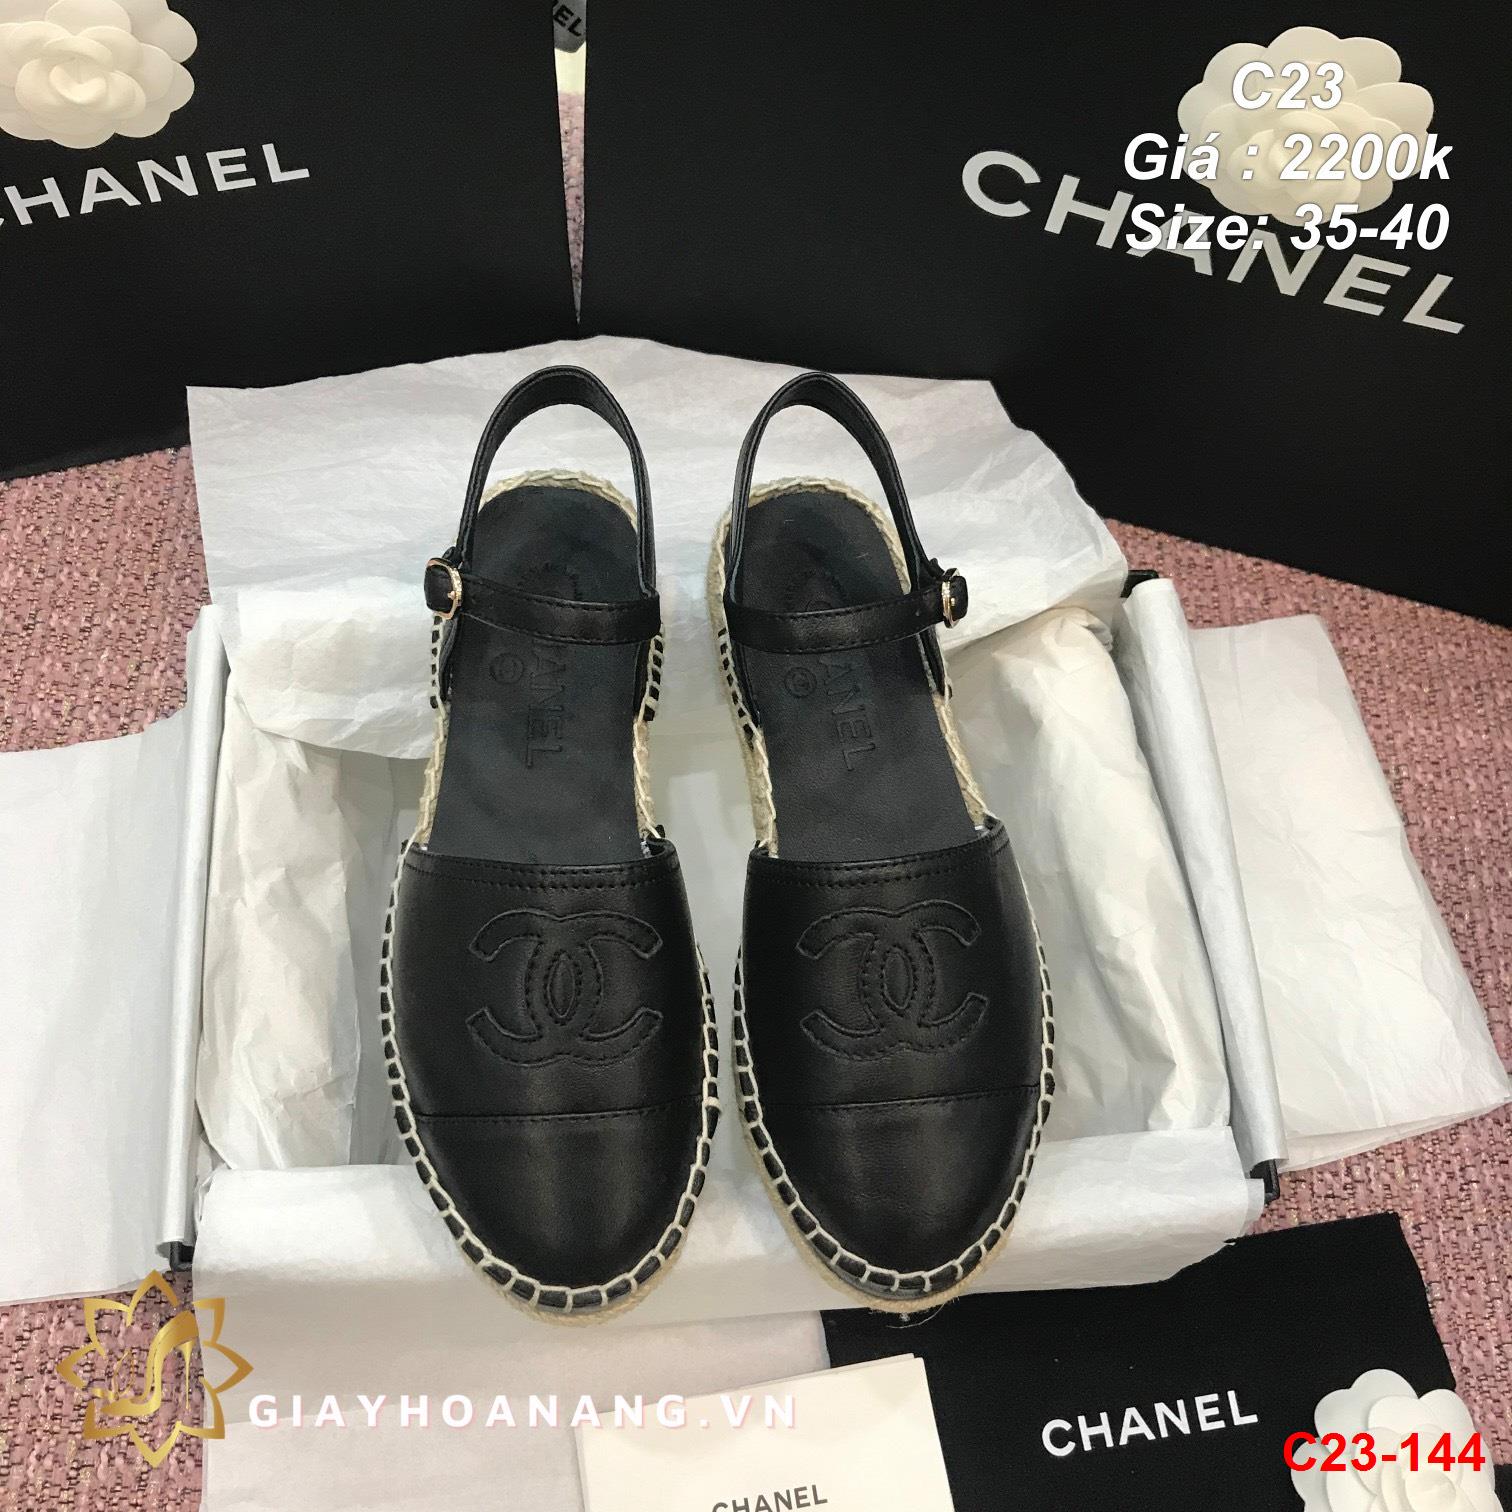 C23-144 Chanel sandal siêu cấp